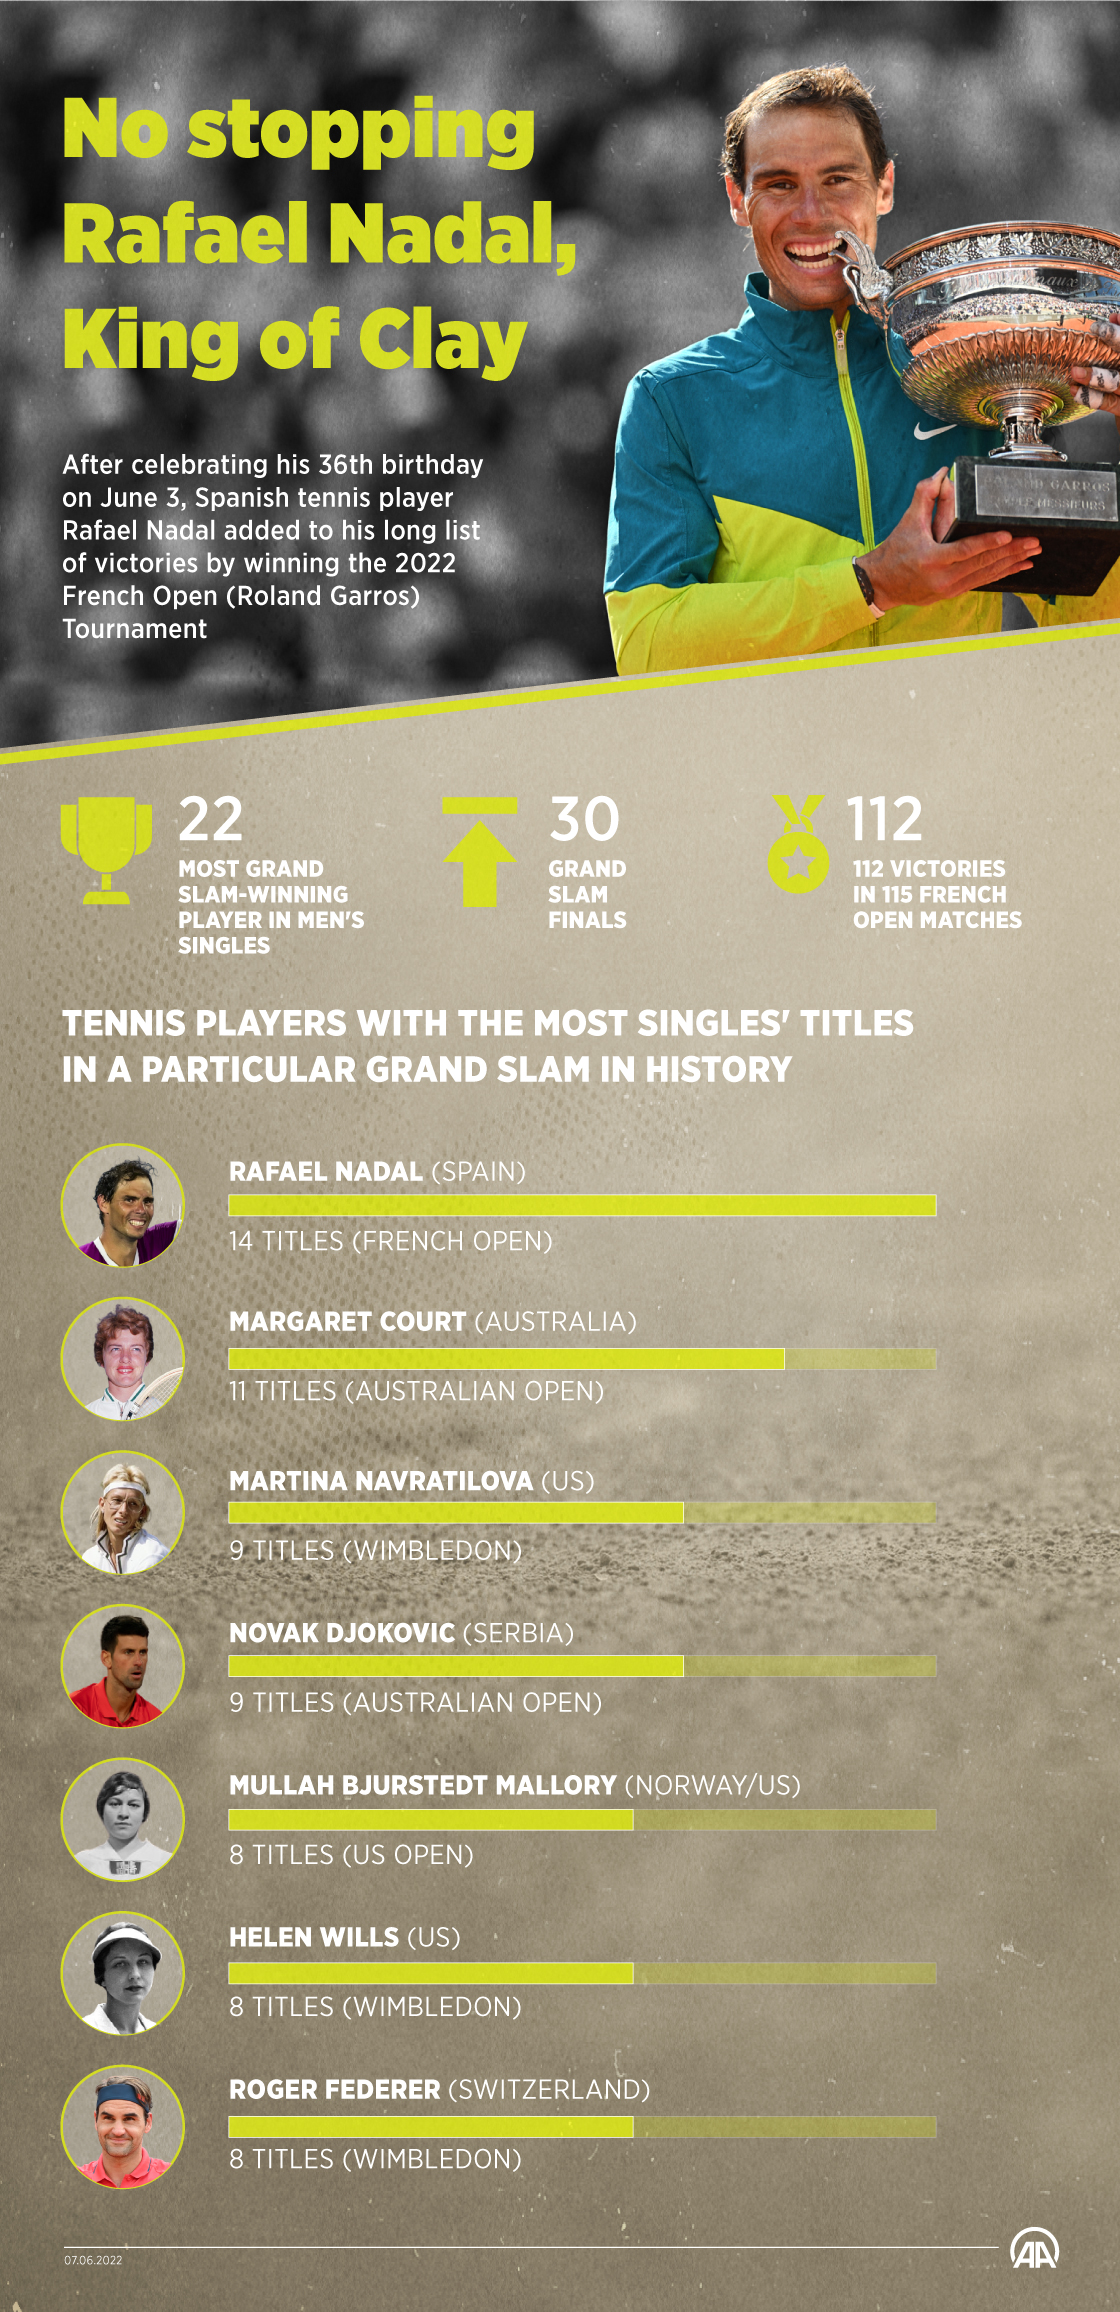 skuffe luge svimmel Rafael Nadal wins 2022 French Open, seals 22nd Grand Slam title